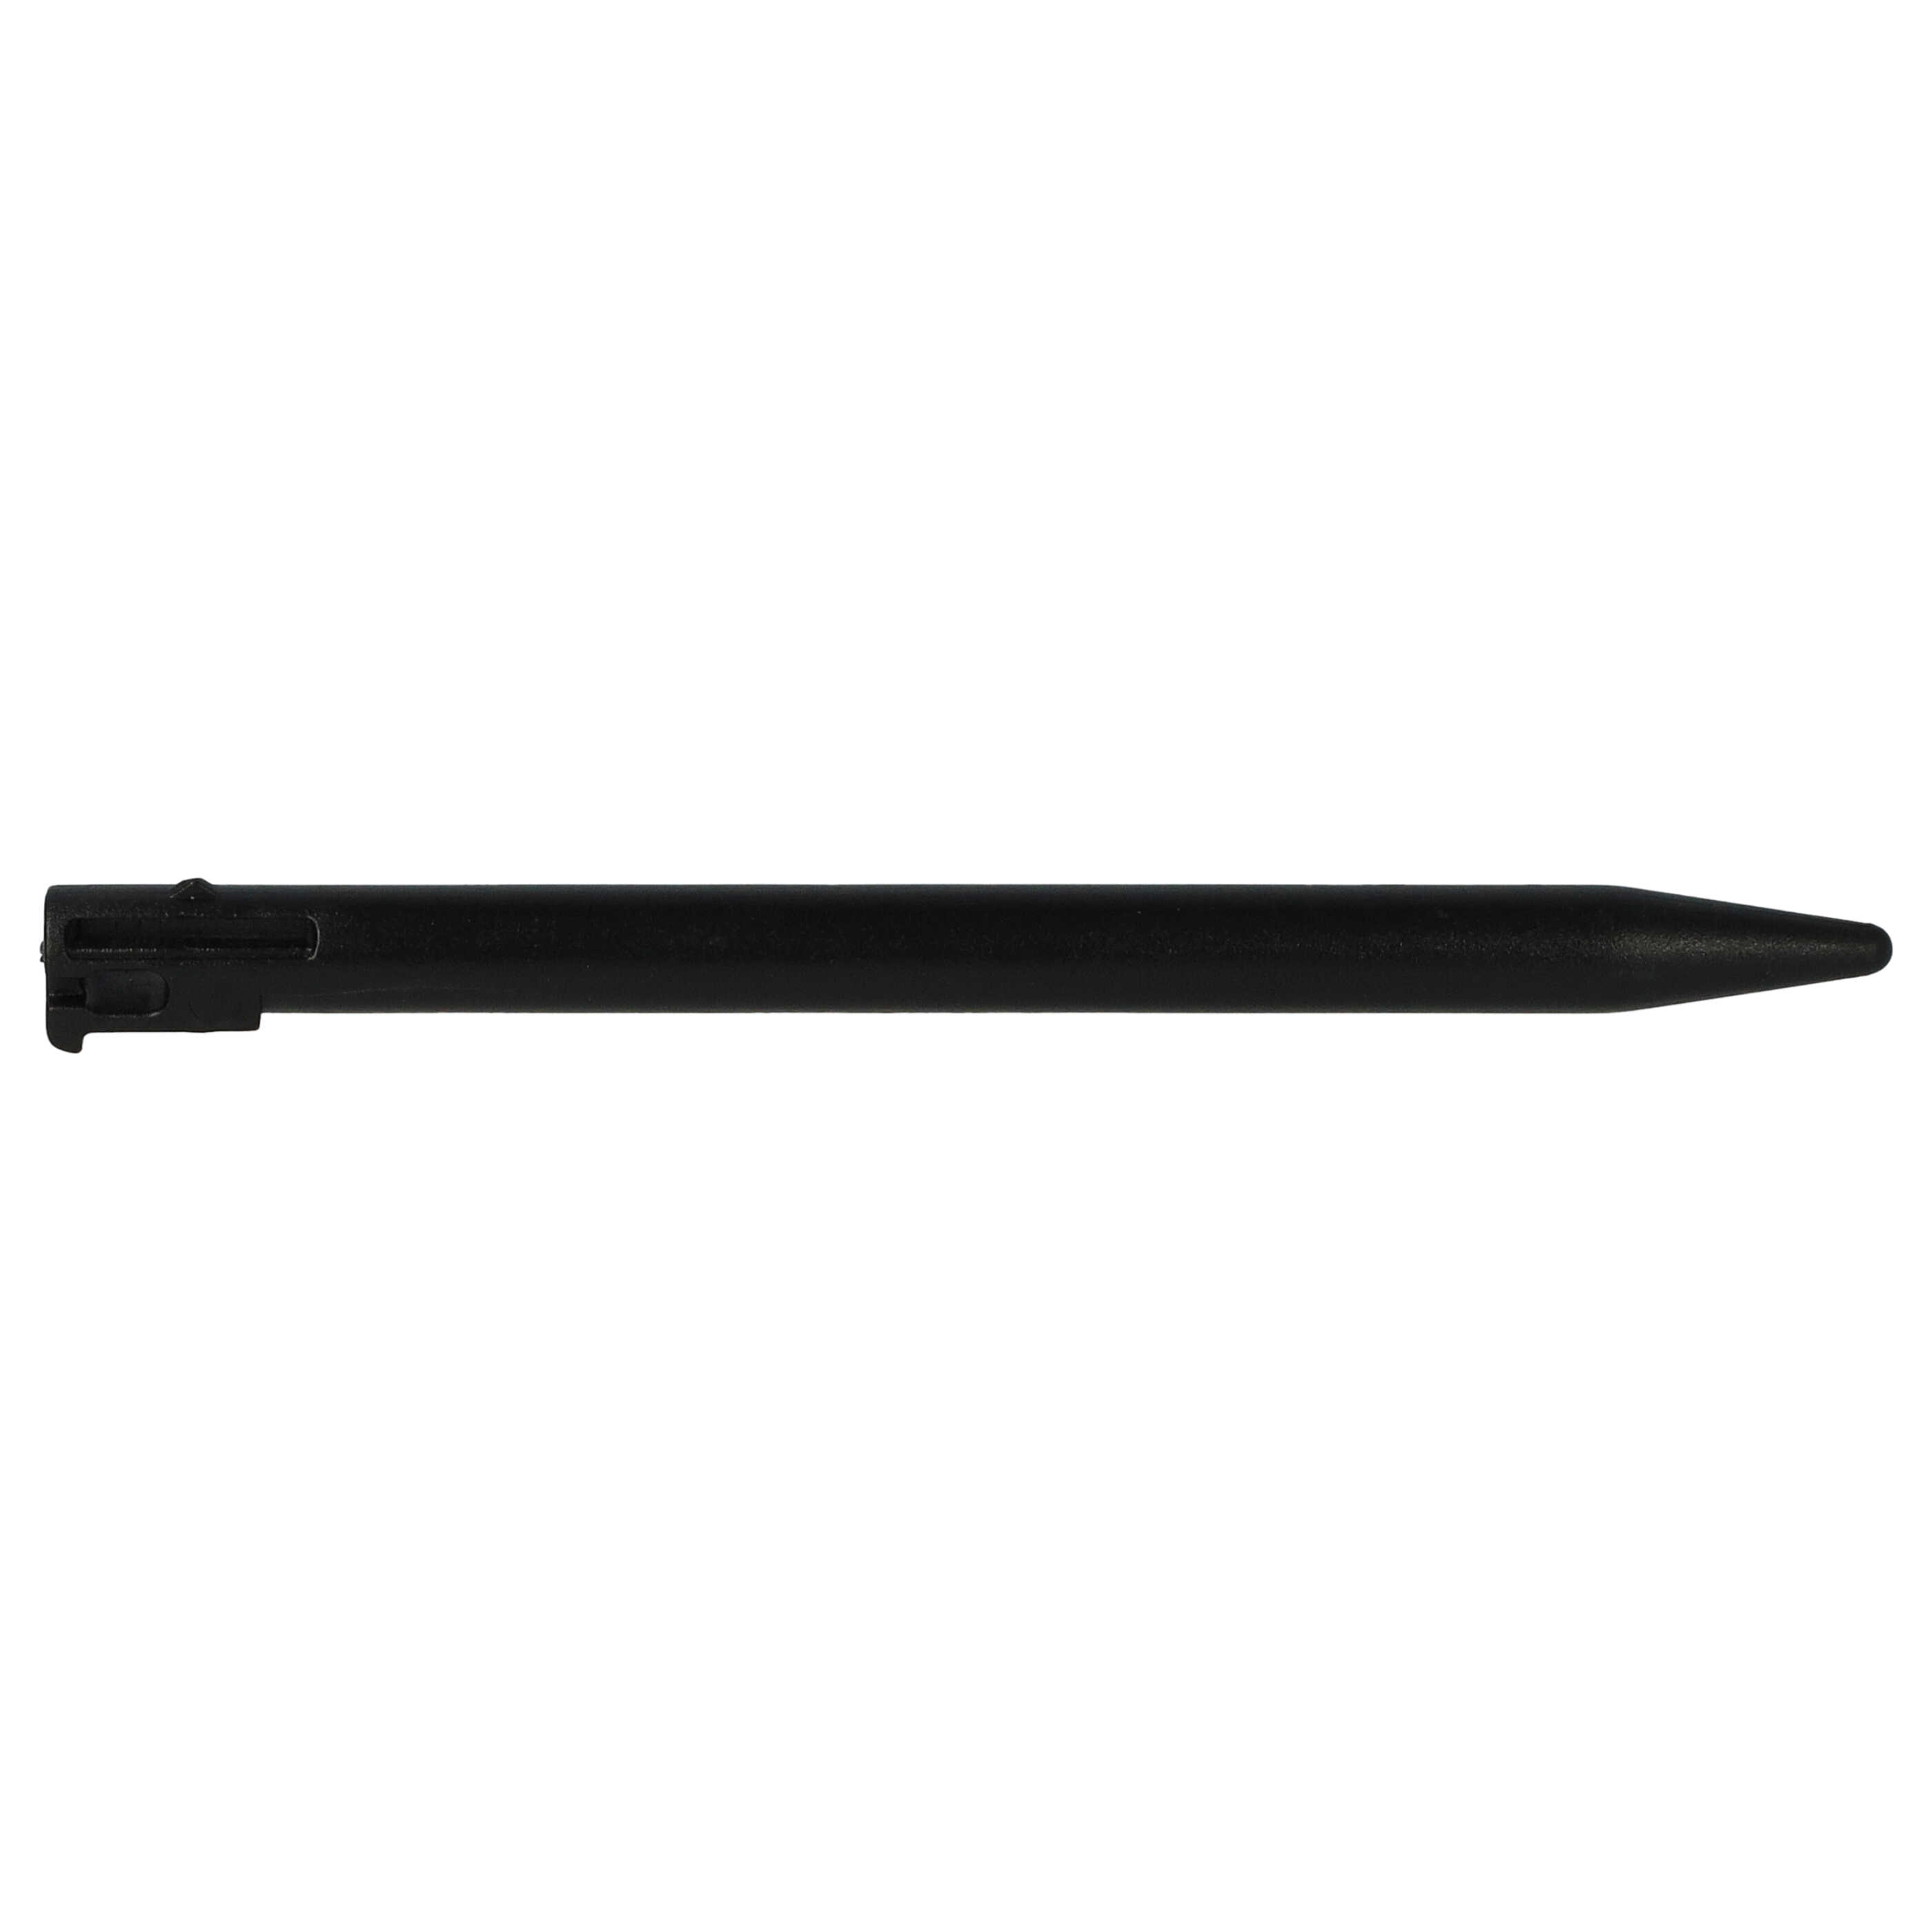 10x Rysik touch pen do konsoli Nintendo 3DS - czarny